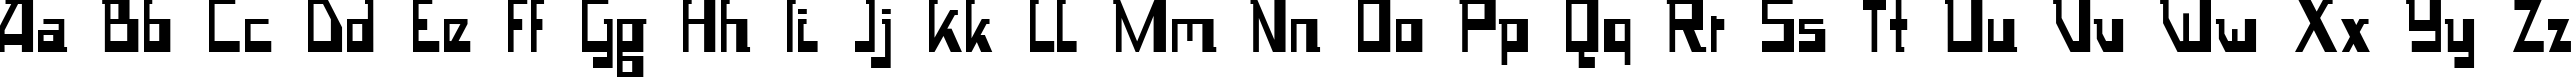 Пример написания английского алфавита шрифтом Space worm